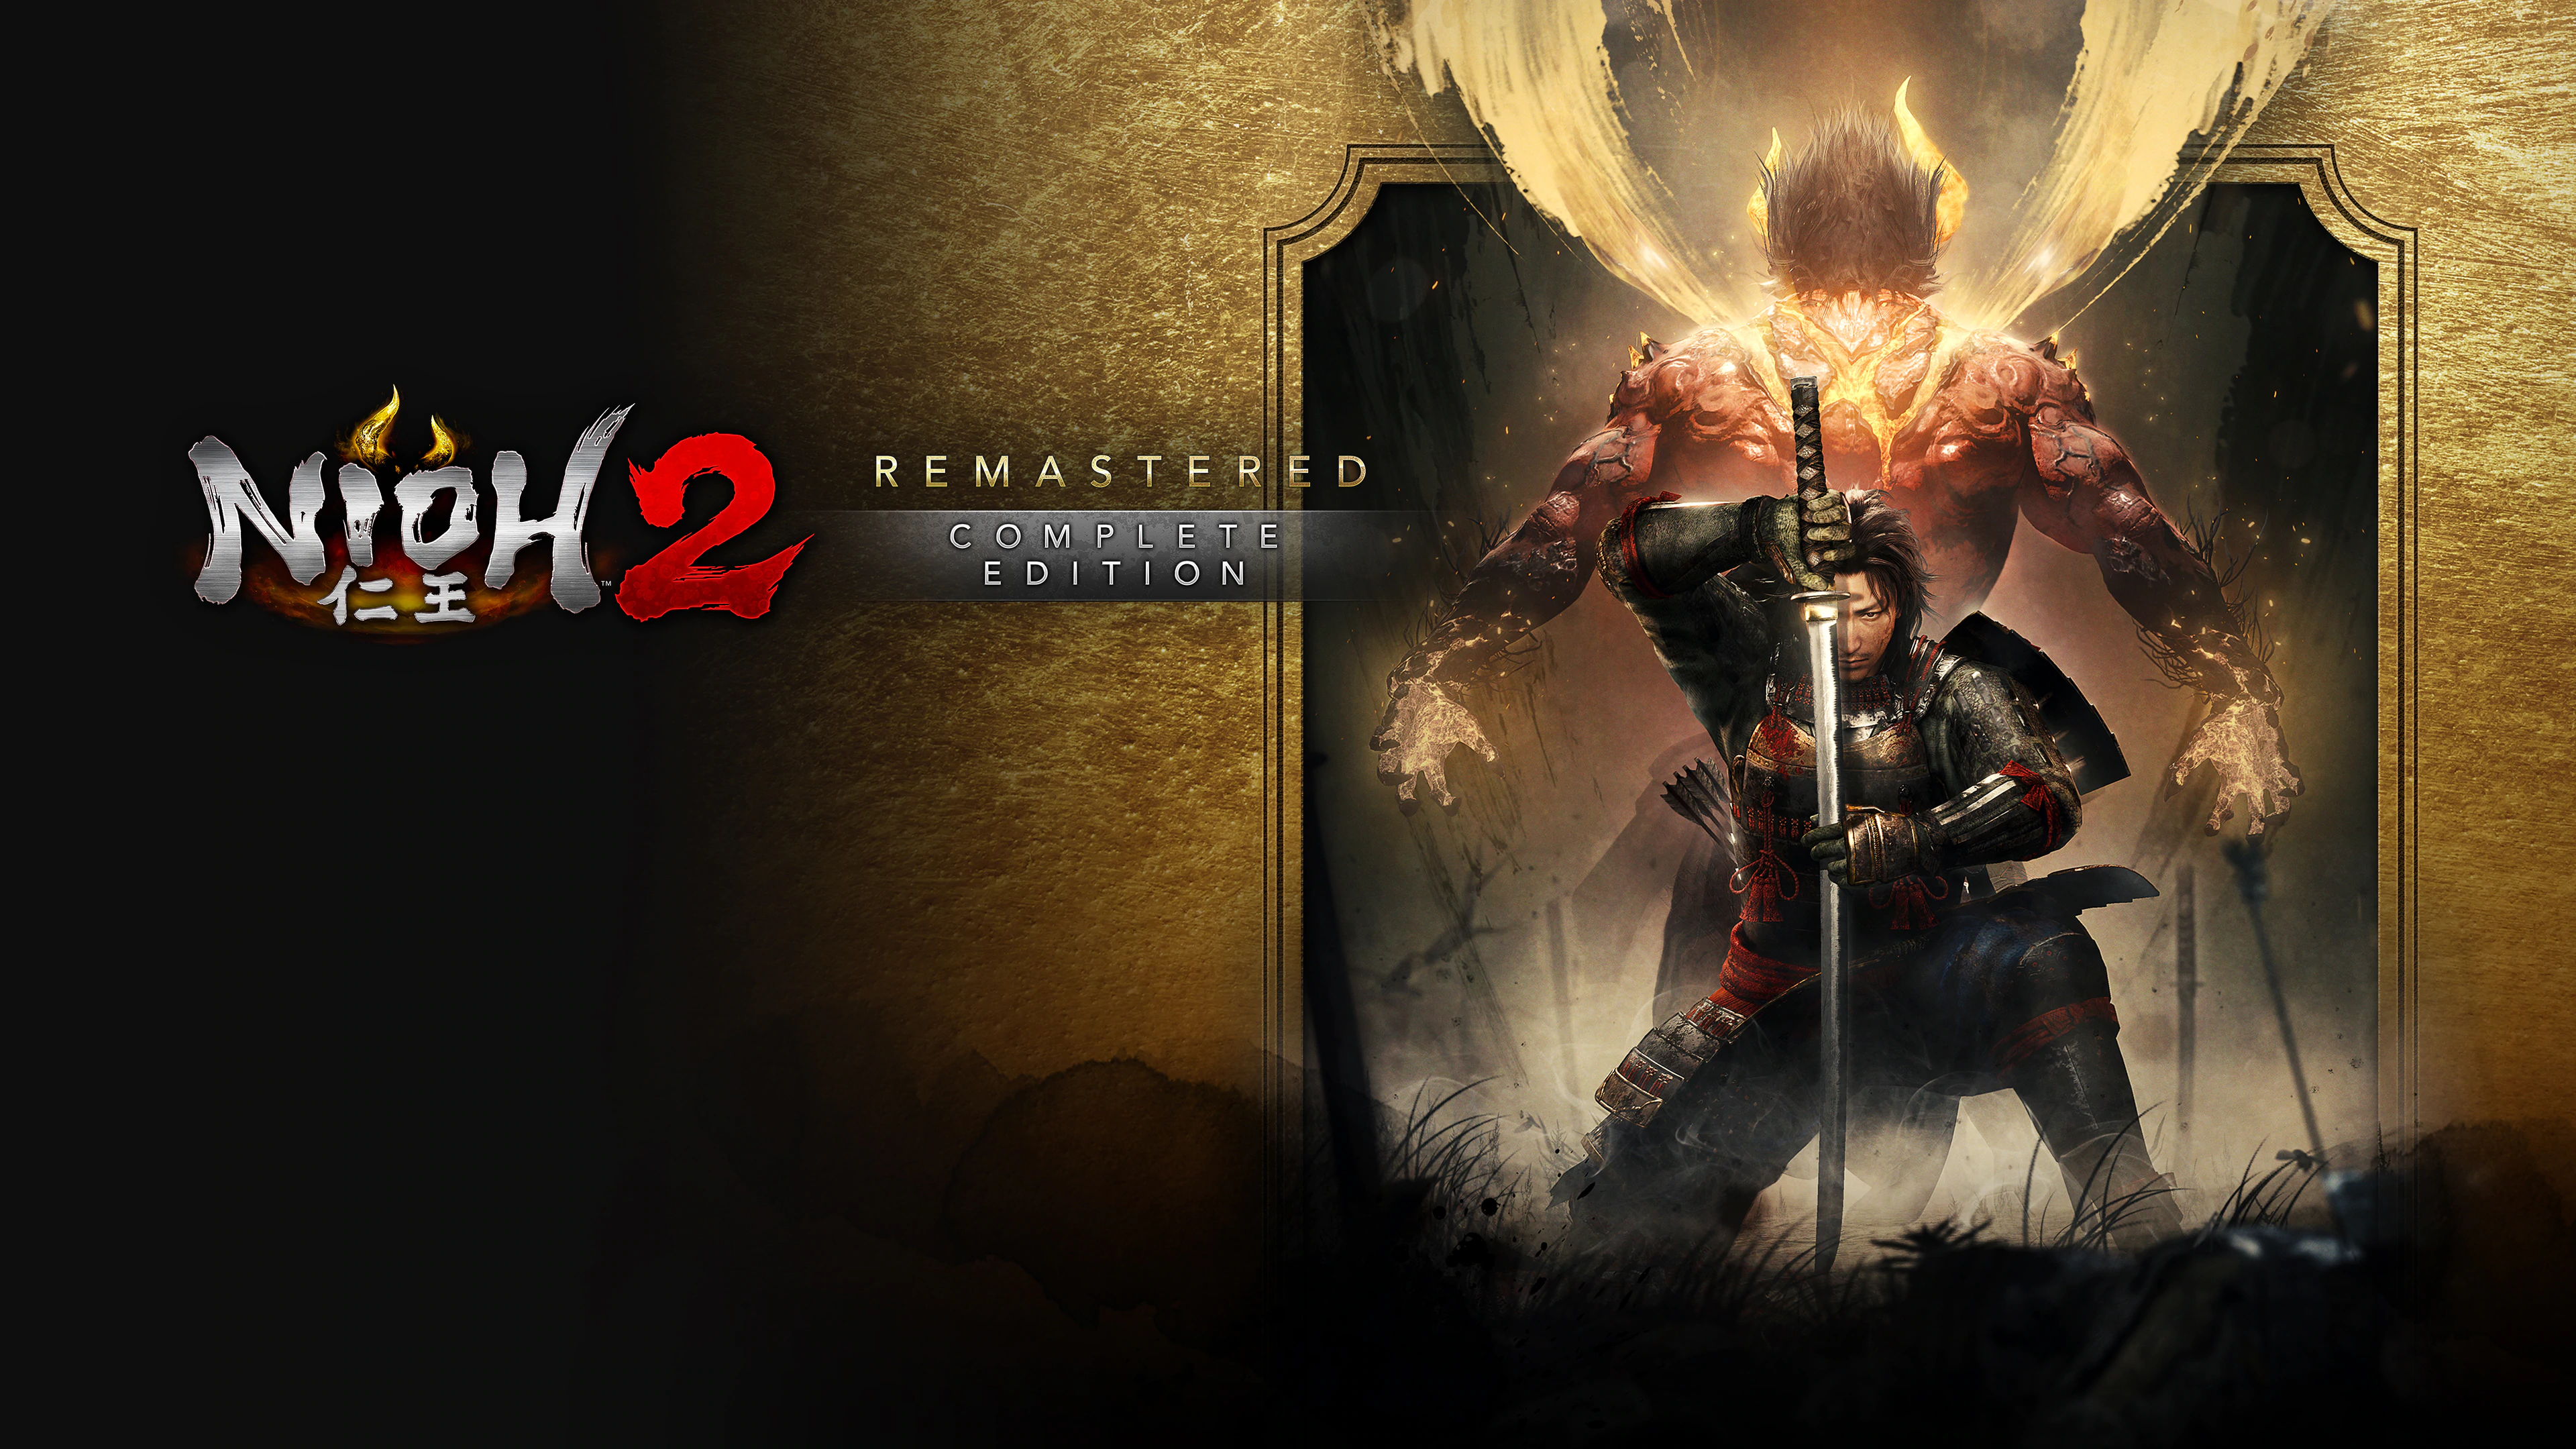 Nioh 2 Remastered Complete Edition Bannervideogamesblogger.com